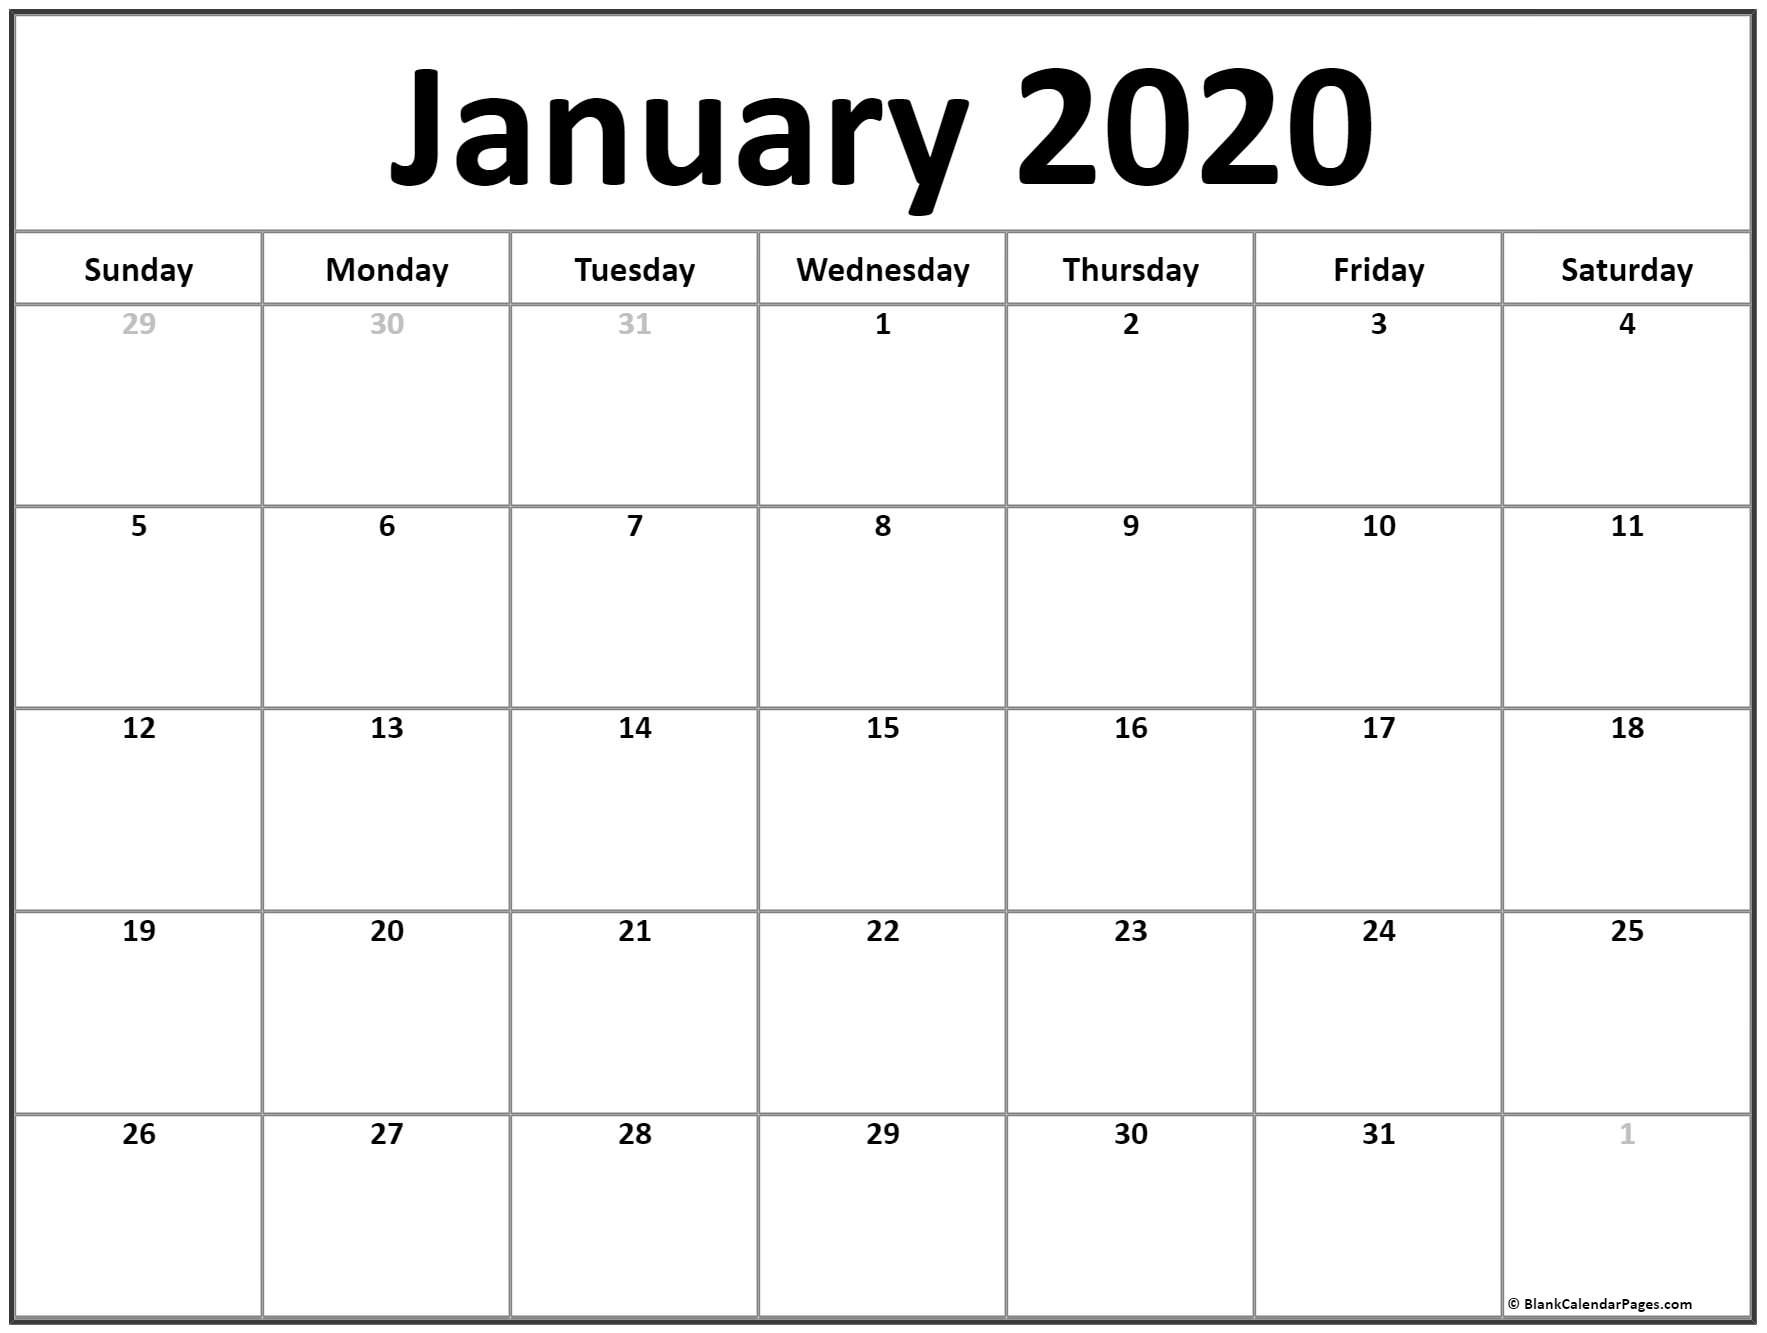 January 2020 Calendar | Free Printable Monthly Calendars-Calendar Of January 2020